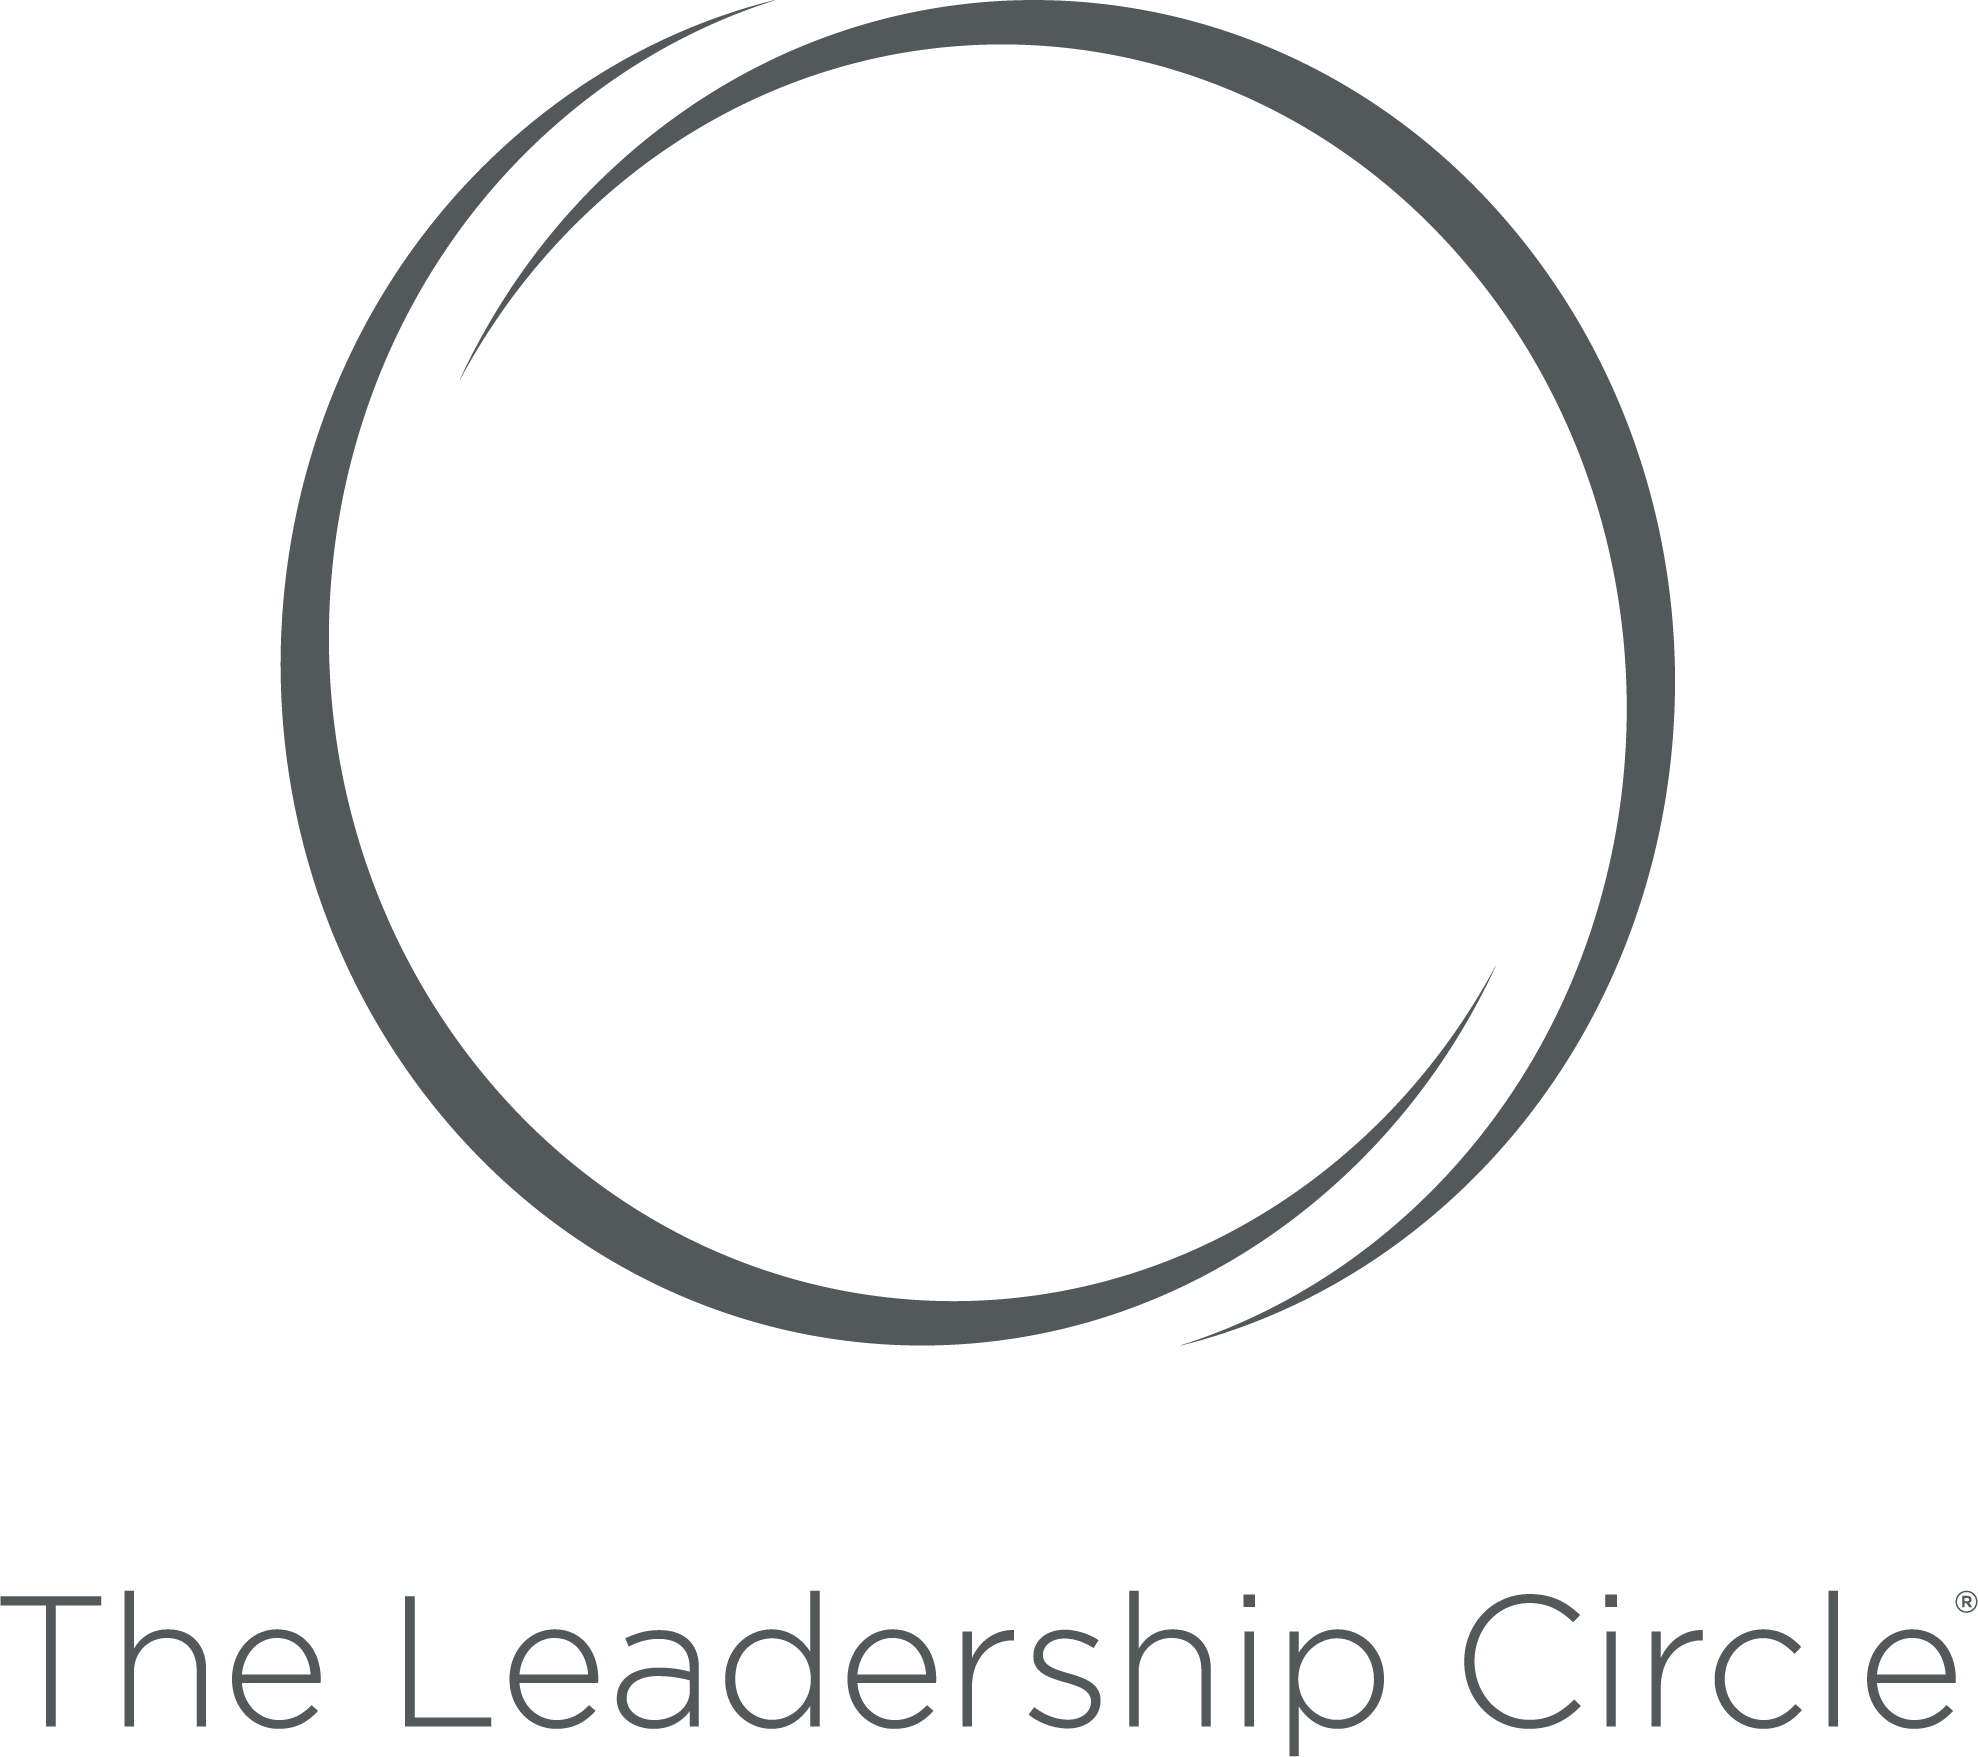 Black White Circle in Circle Logo - The Keys to Effective Leadership - The Leadership Circle